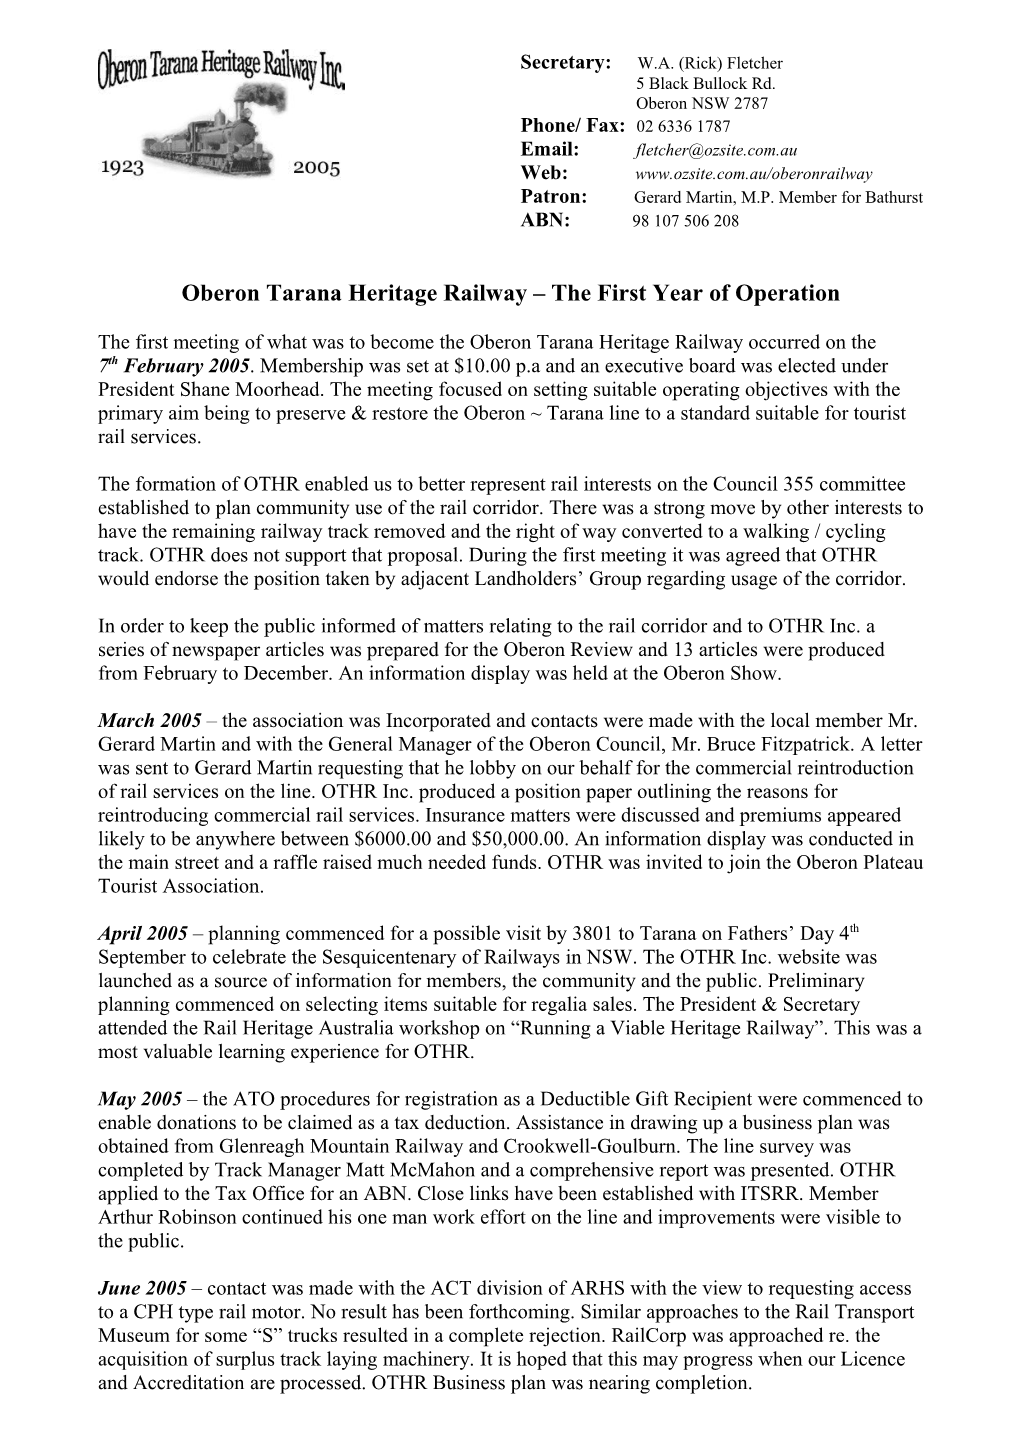 Oberon Tarana Heritage Railway the First Year of Operation